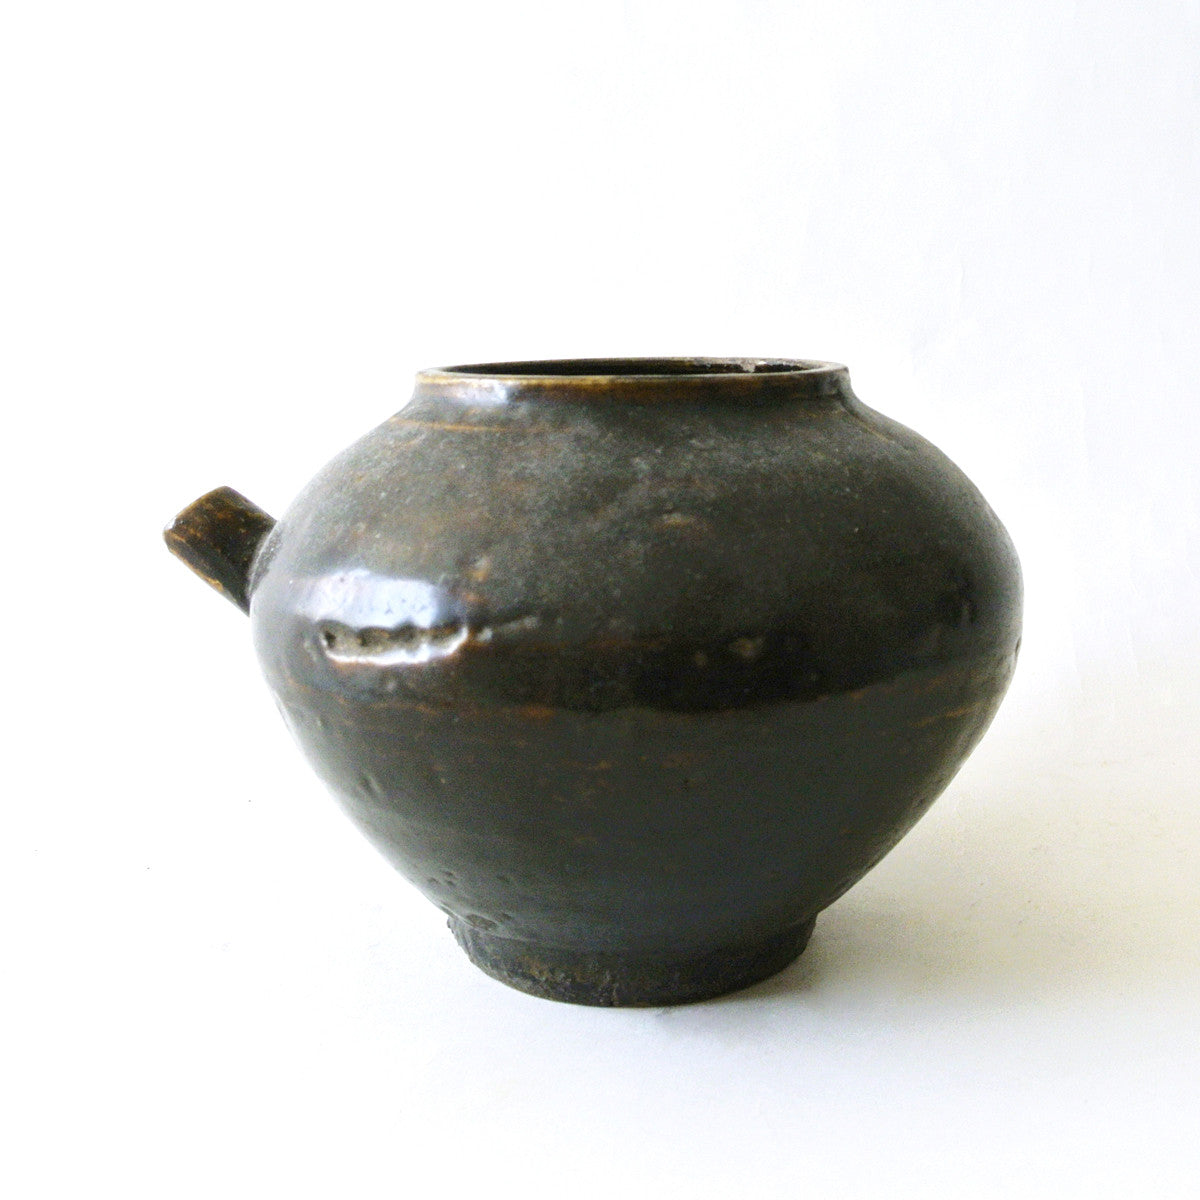 Clay Pot Ewer from Chosun Dynasty